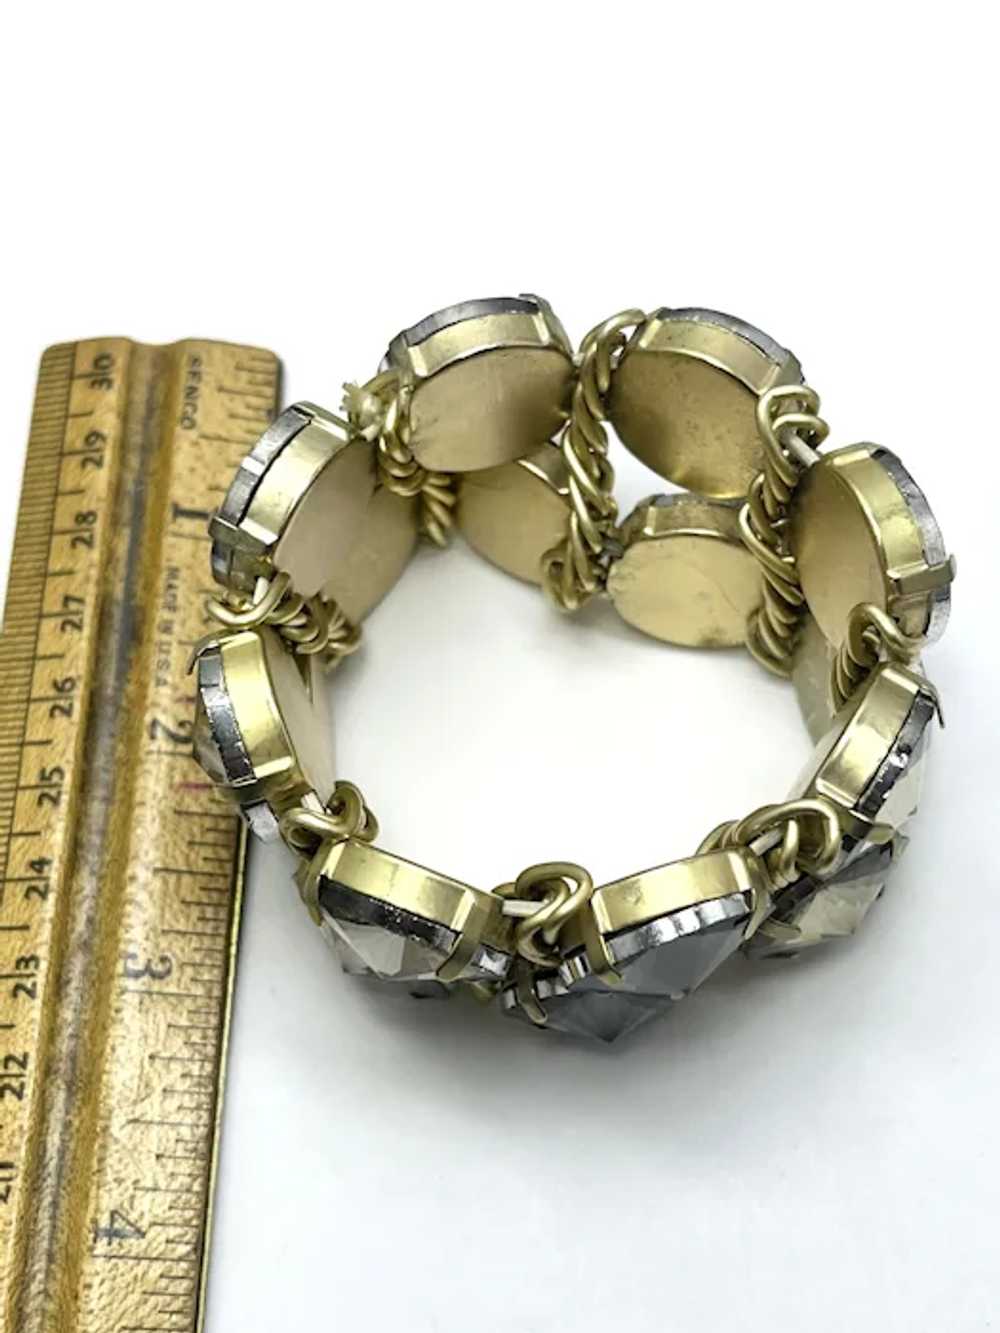 Vintage Rhinestone Jeweled Stretch Bracelet - image 6